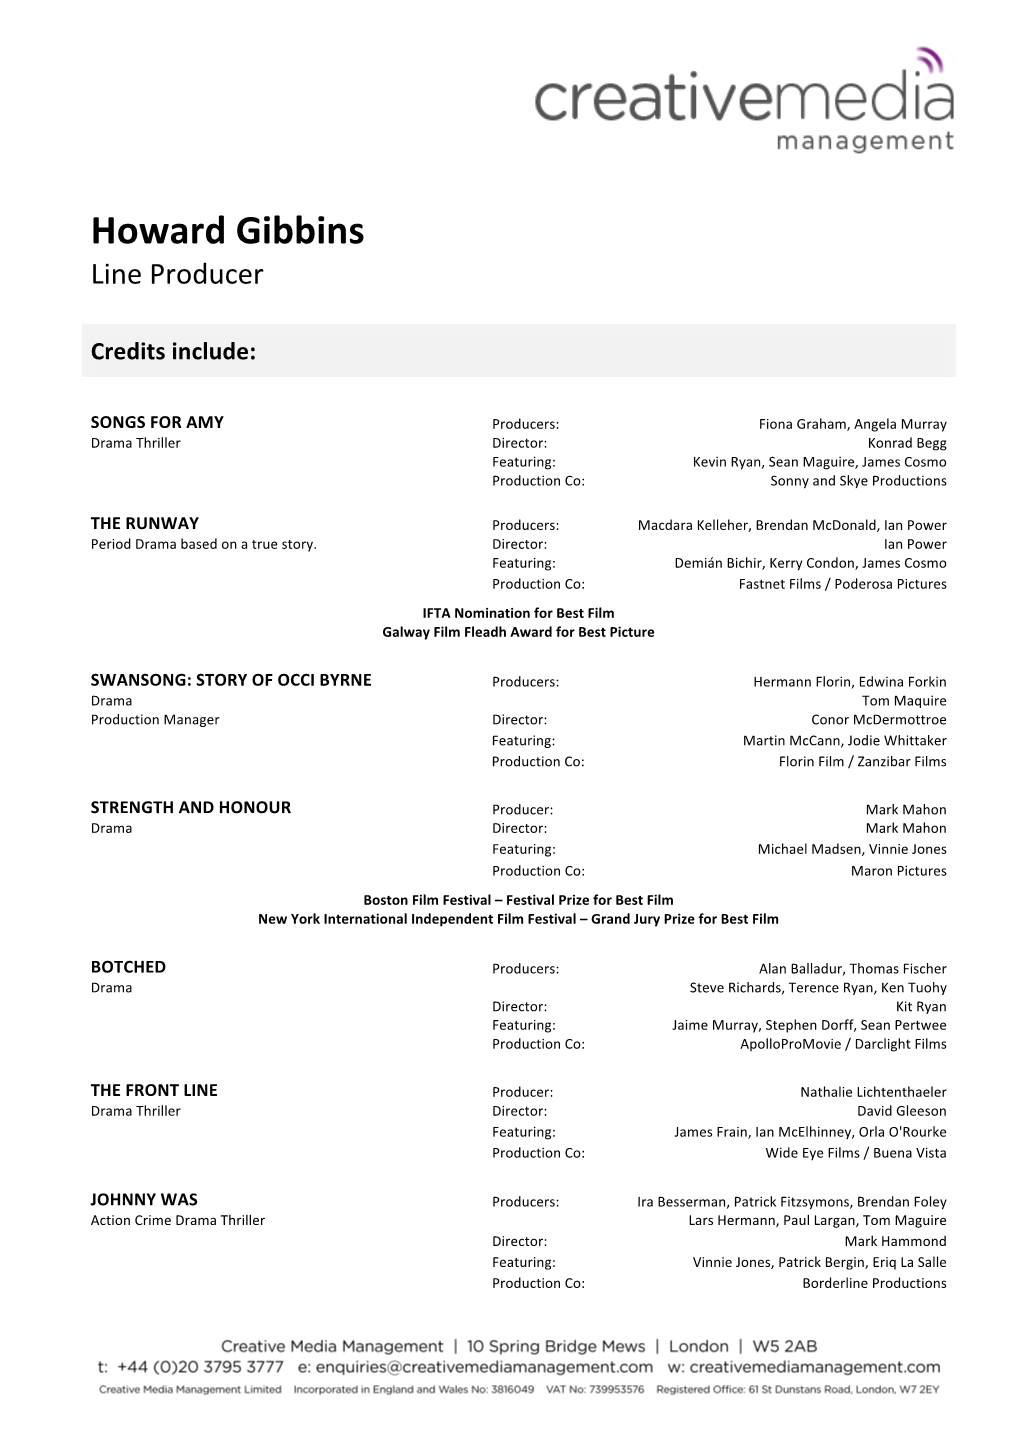 Howard Gibbins Line Producer